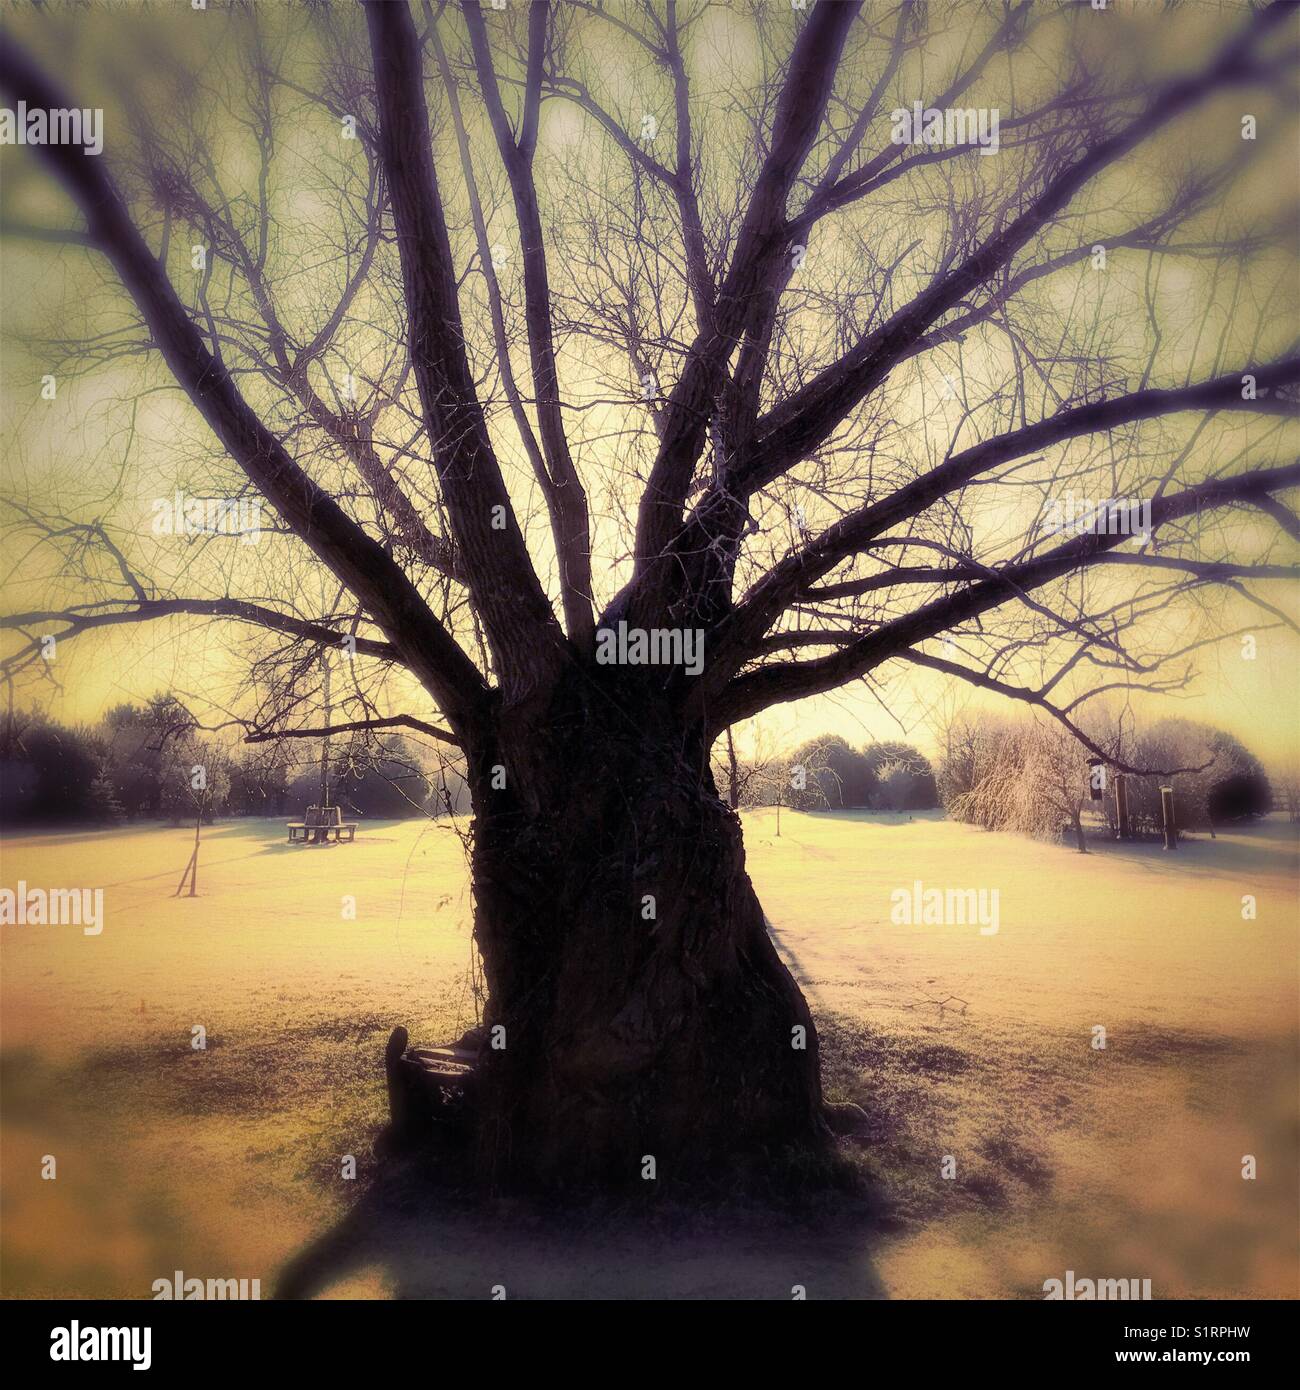 Willow tree silhouette Stock Photo